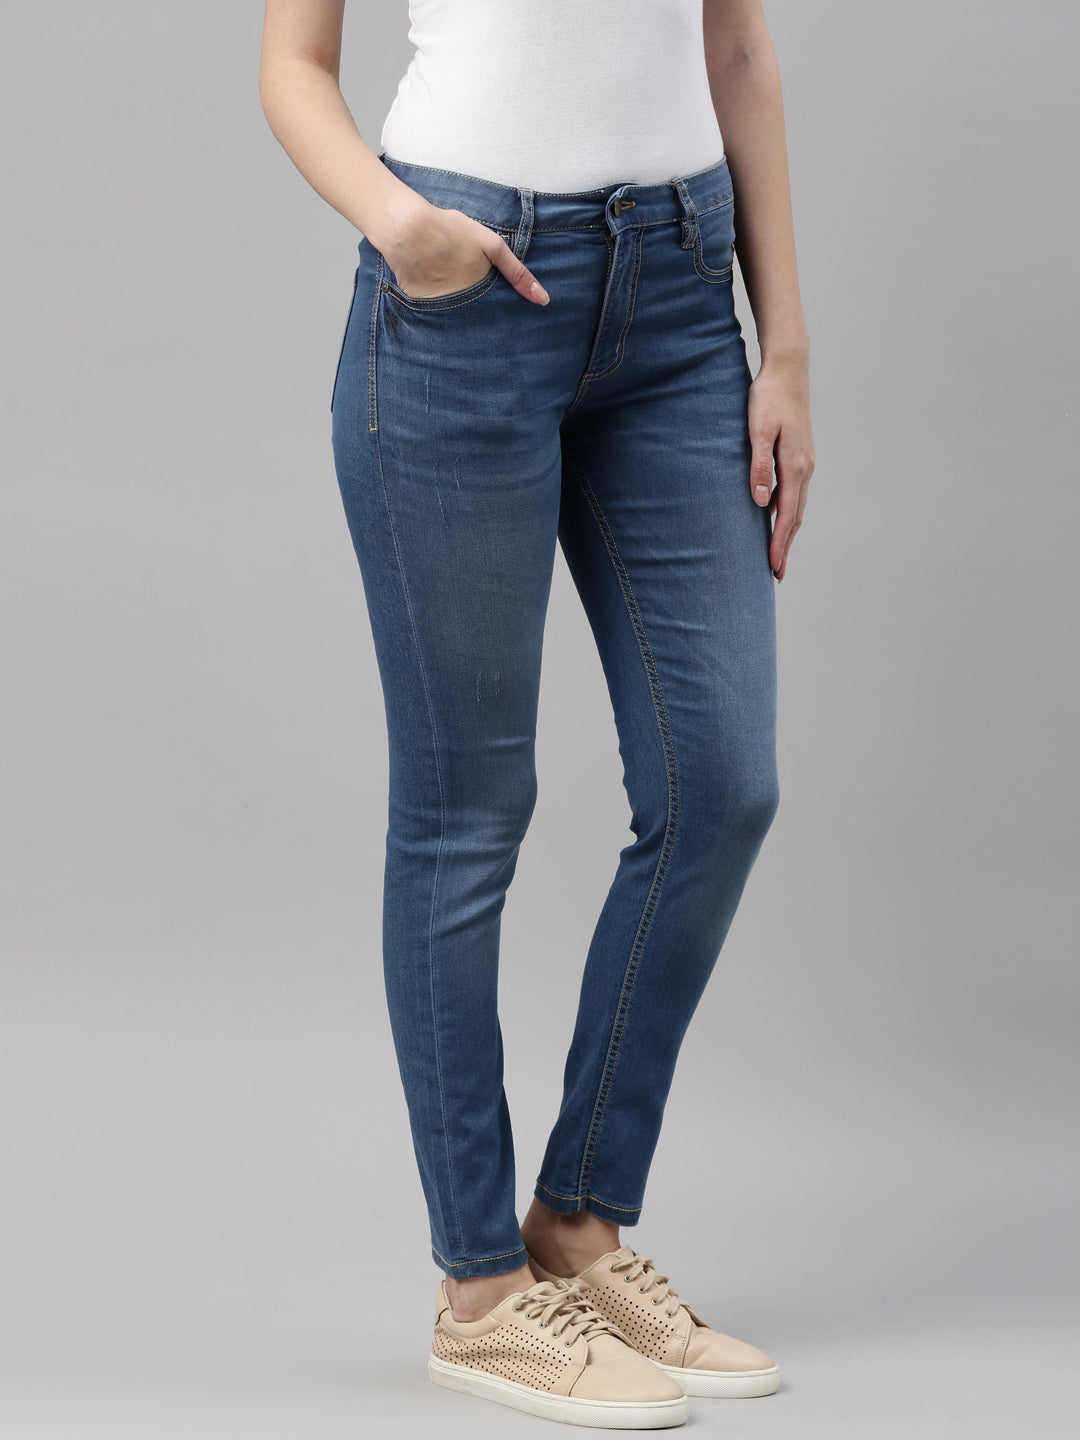 Women's High Rise Skinny Jean | Women's Bottoms | Abercrombie.com